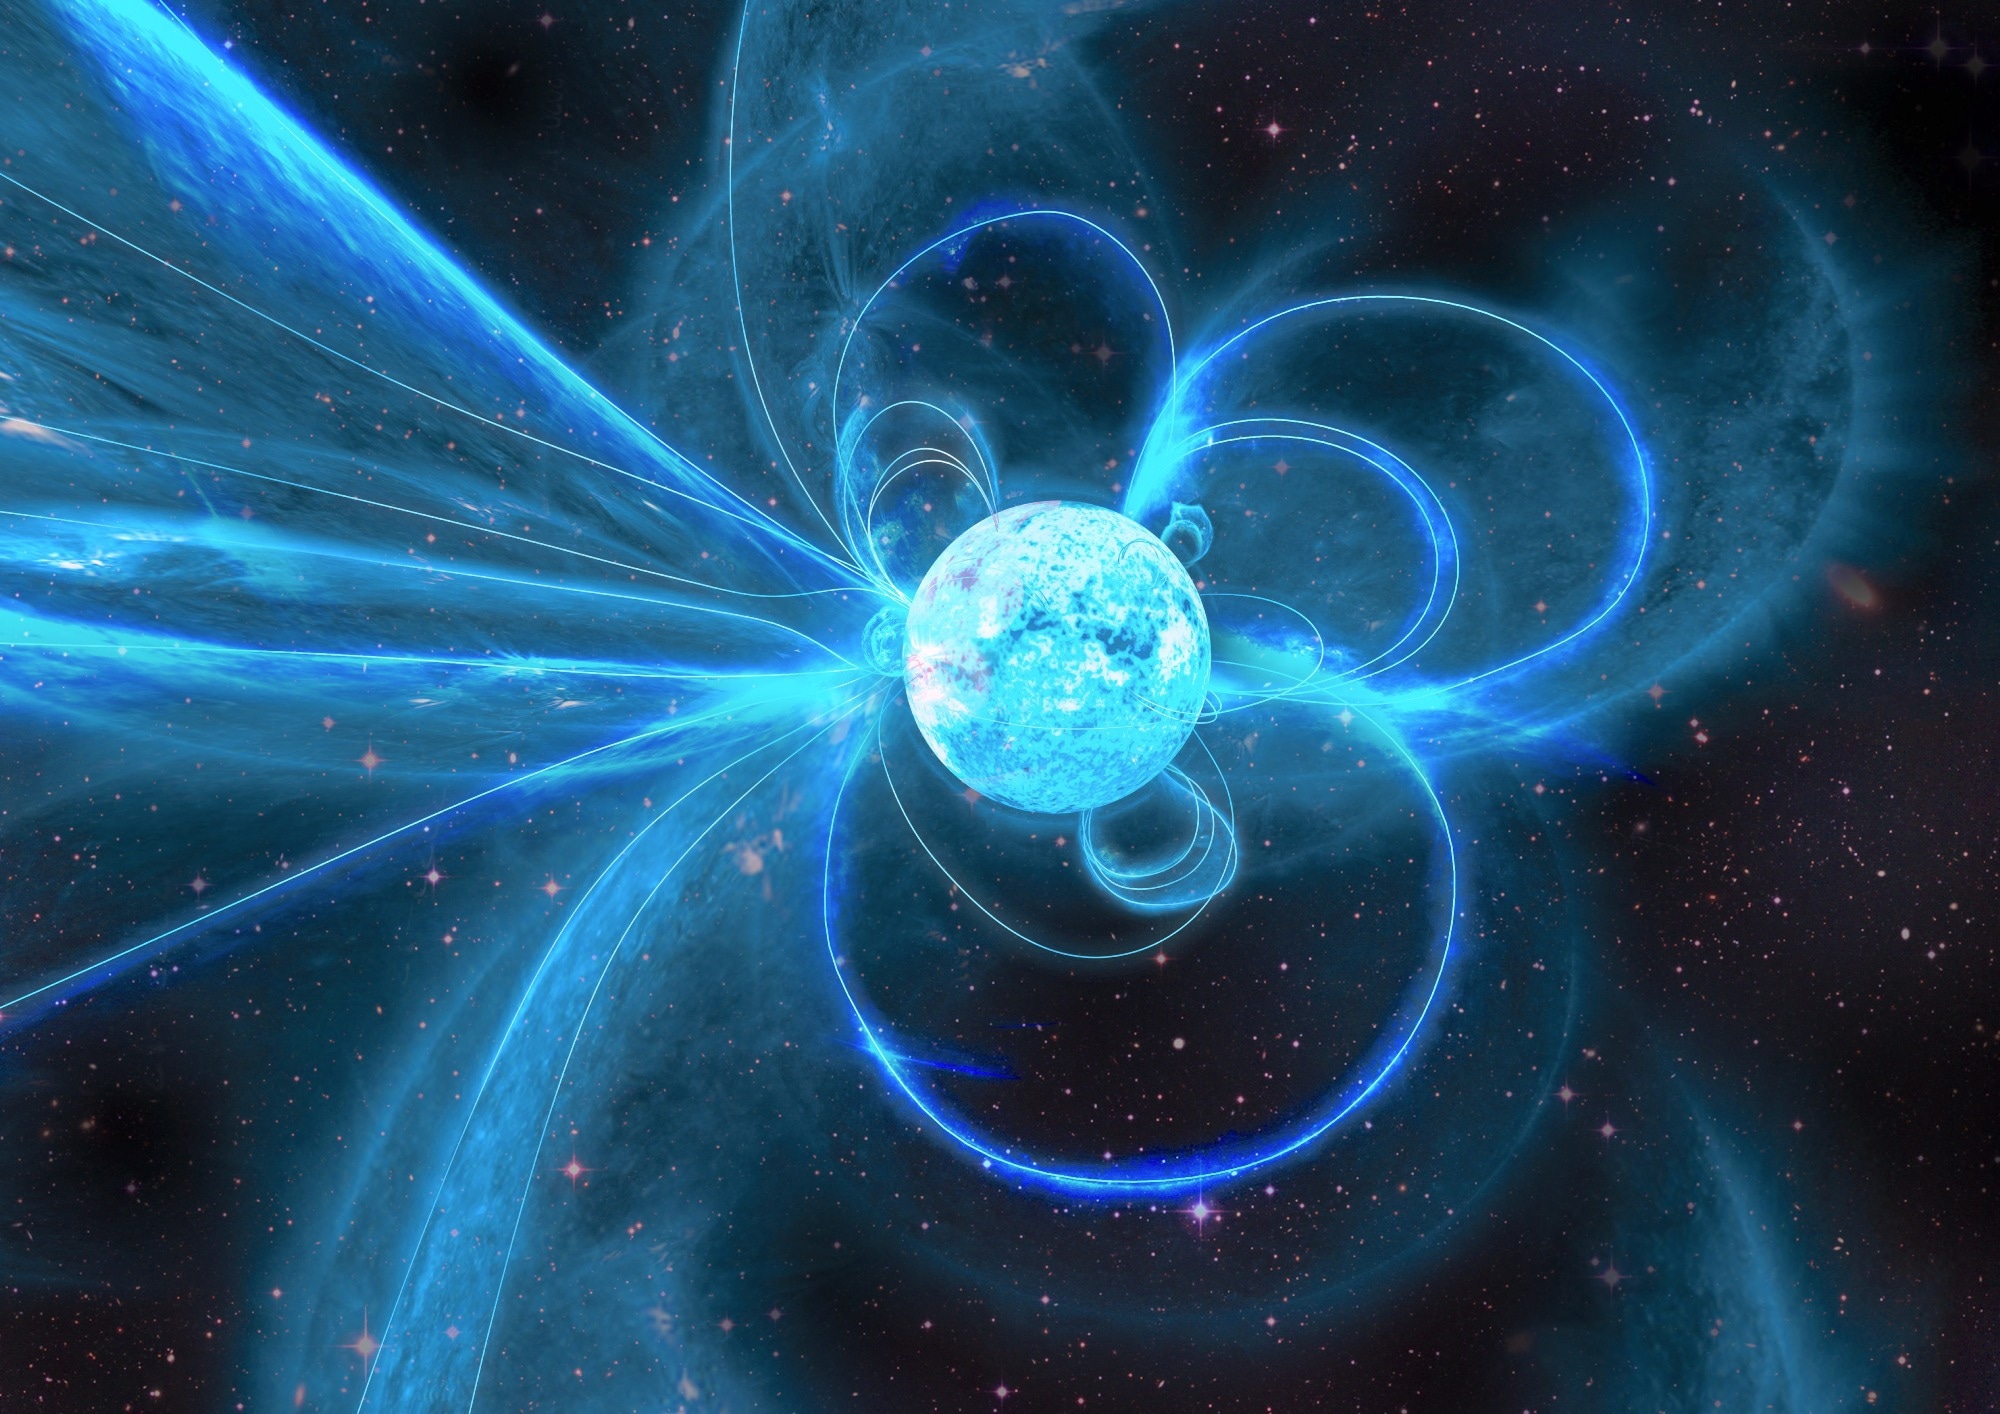 csrio telescope detects unprecedented behaviour from nearby magnetar